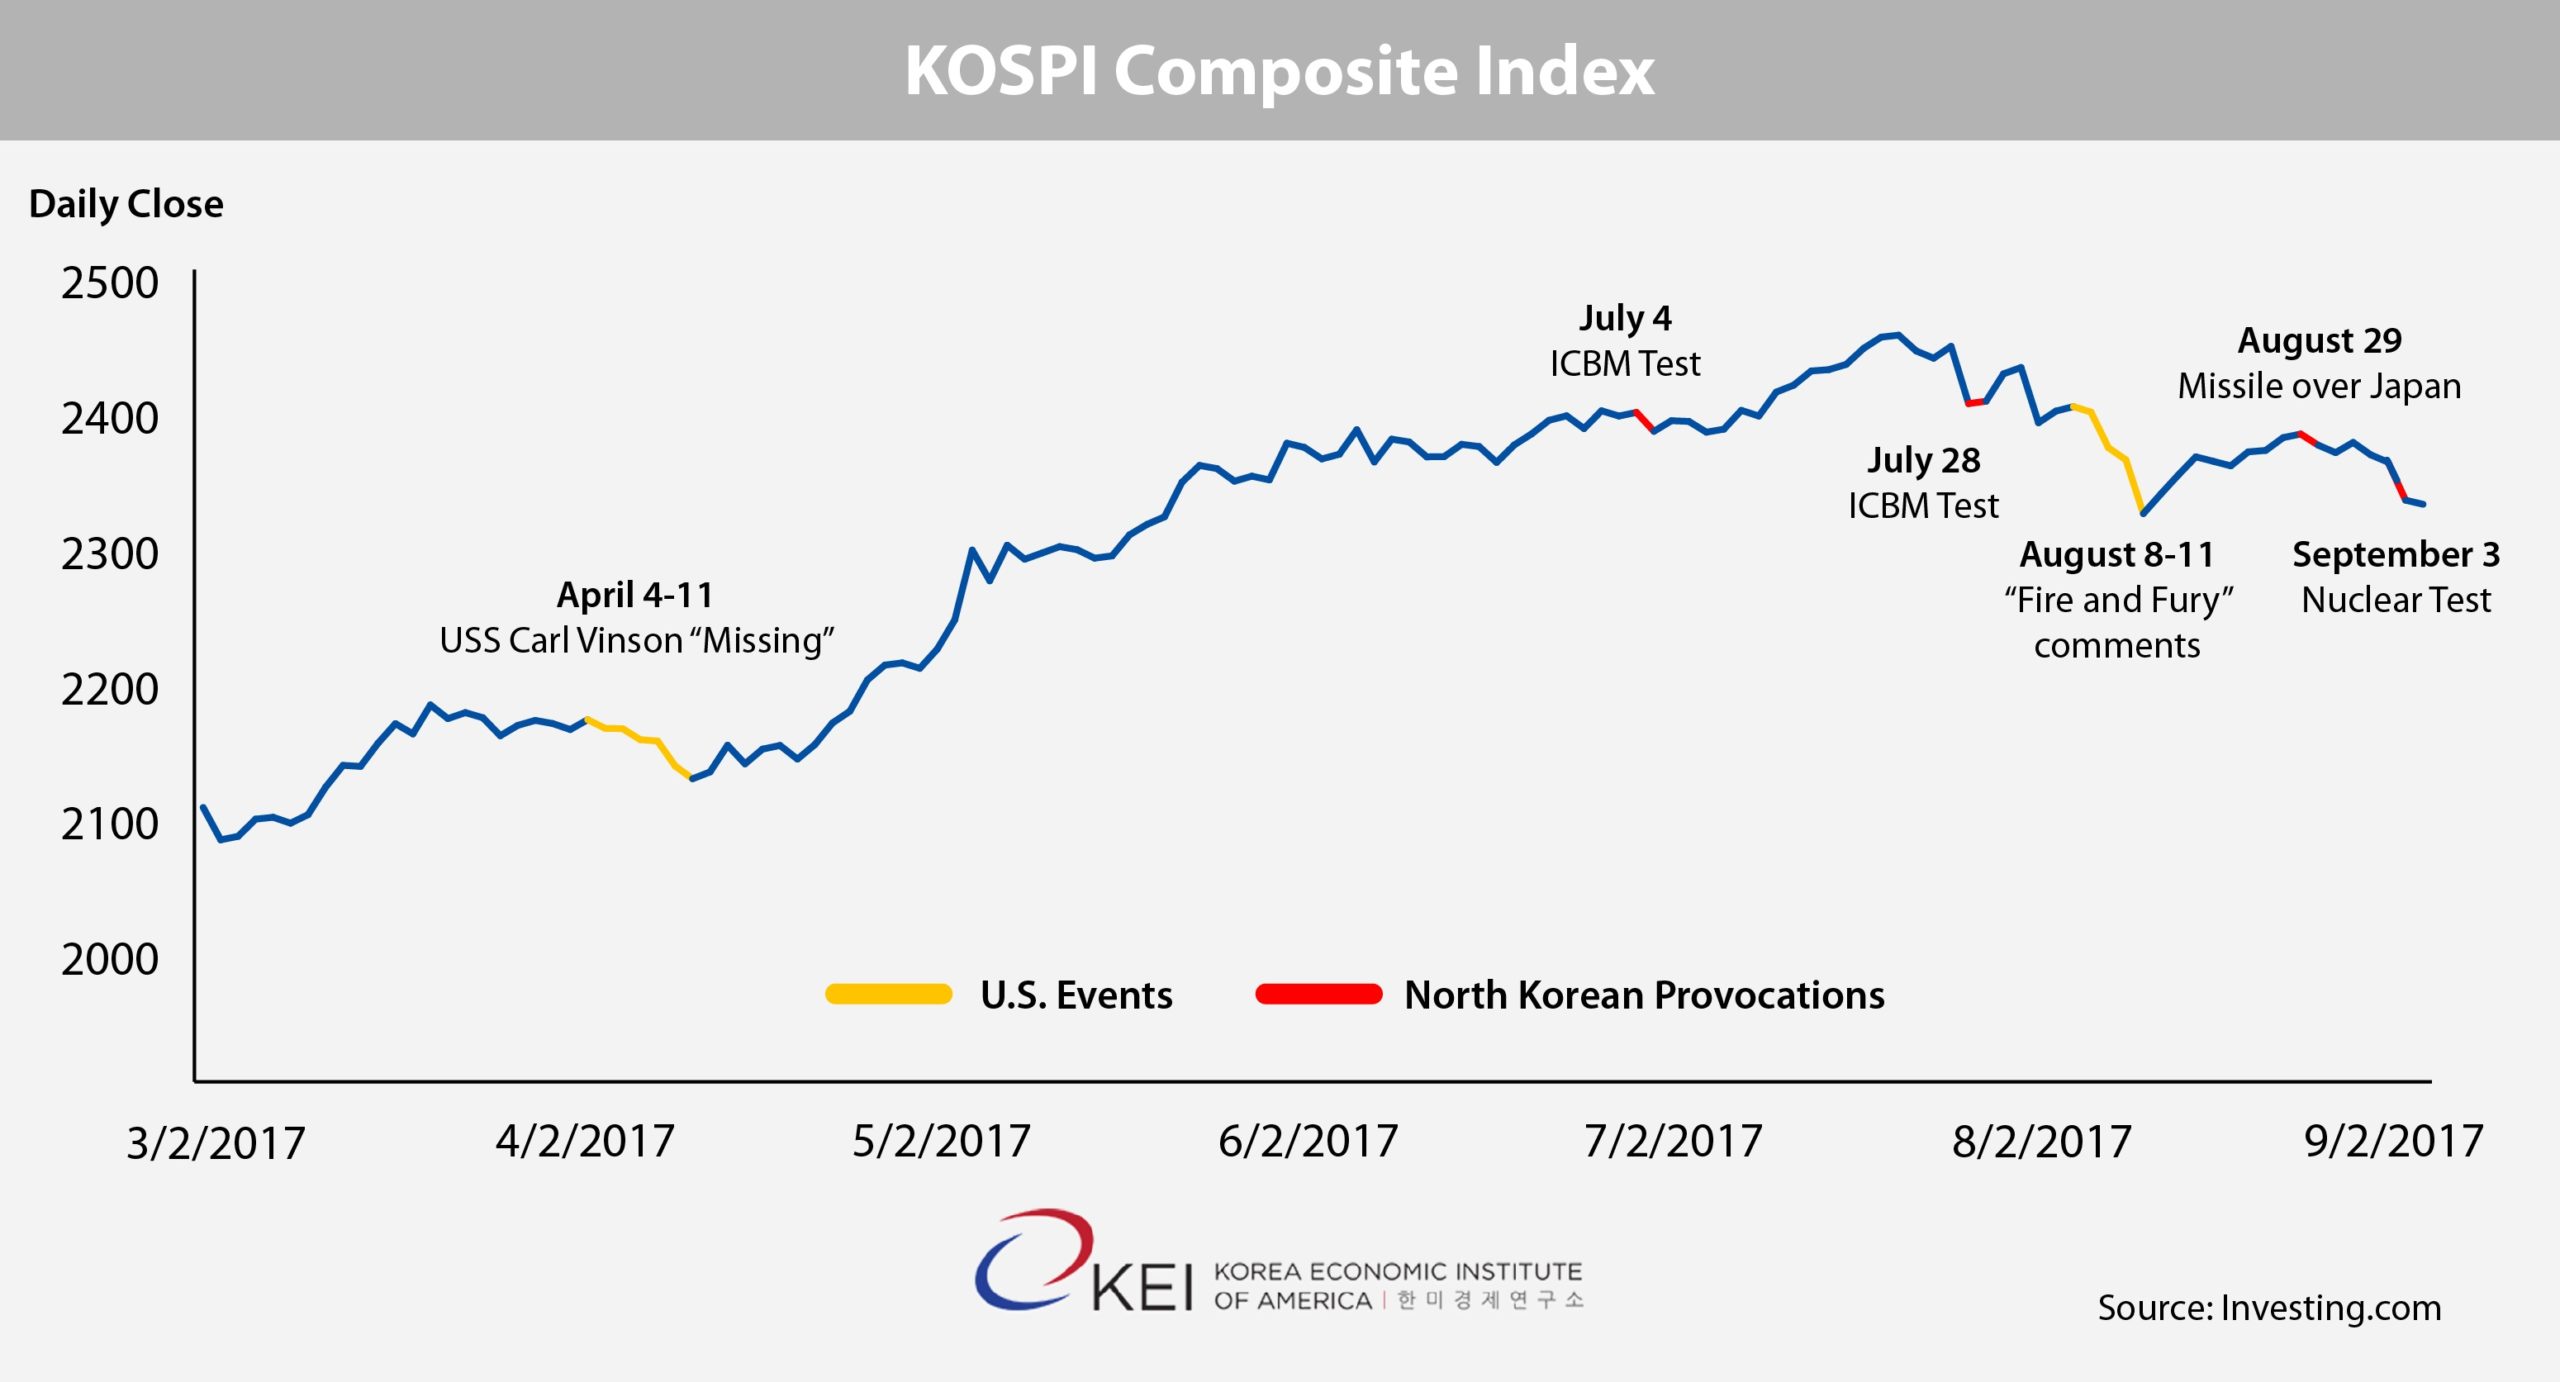 KOSPI stock index, March to September 2017